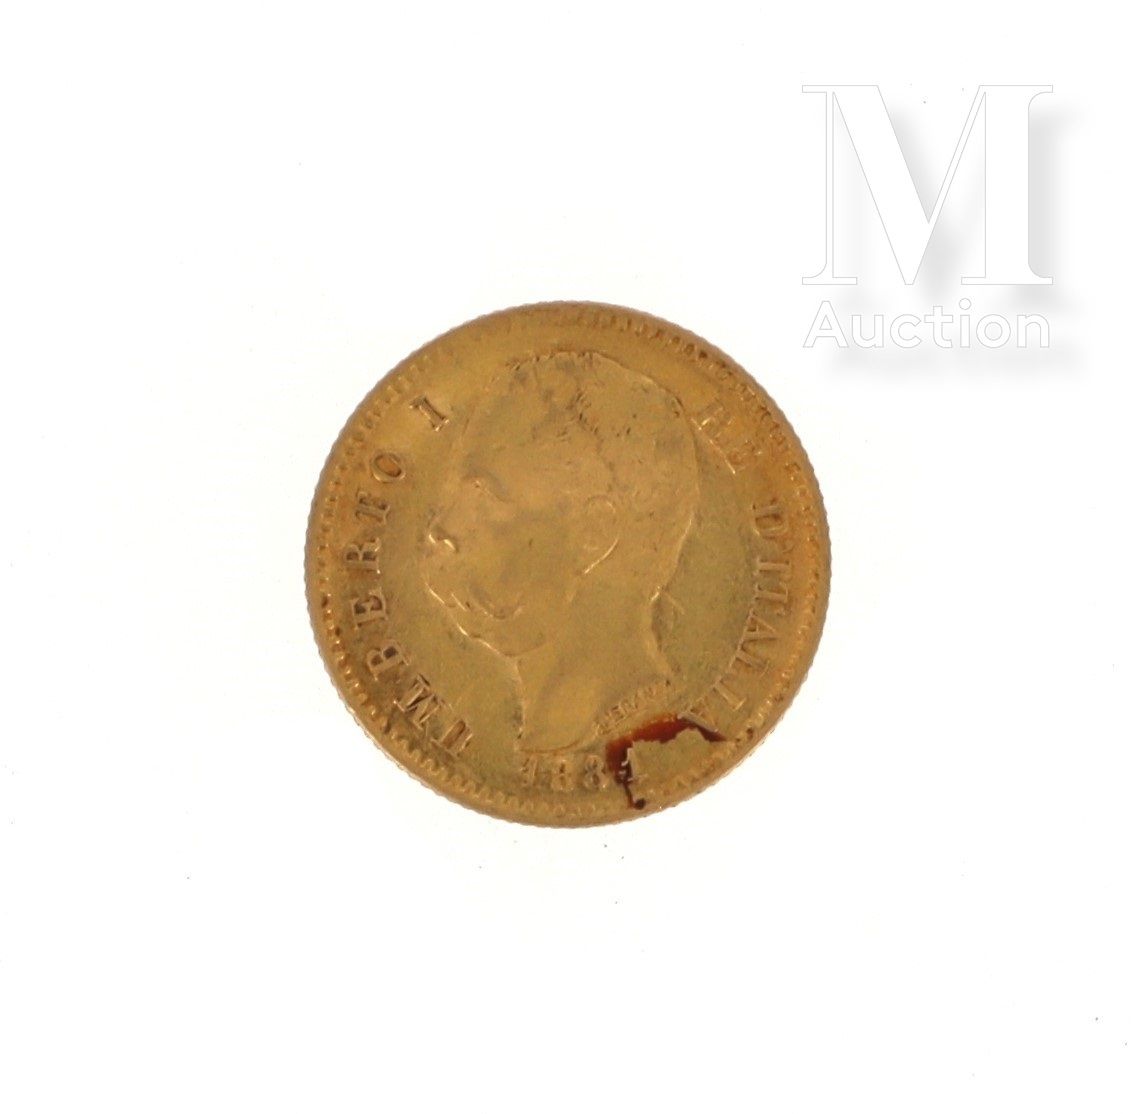 Pièce 20 Lire or Une pièce en or de 20 Lire Italie Umberto I

1881